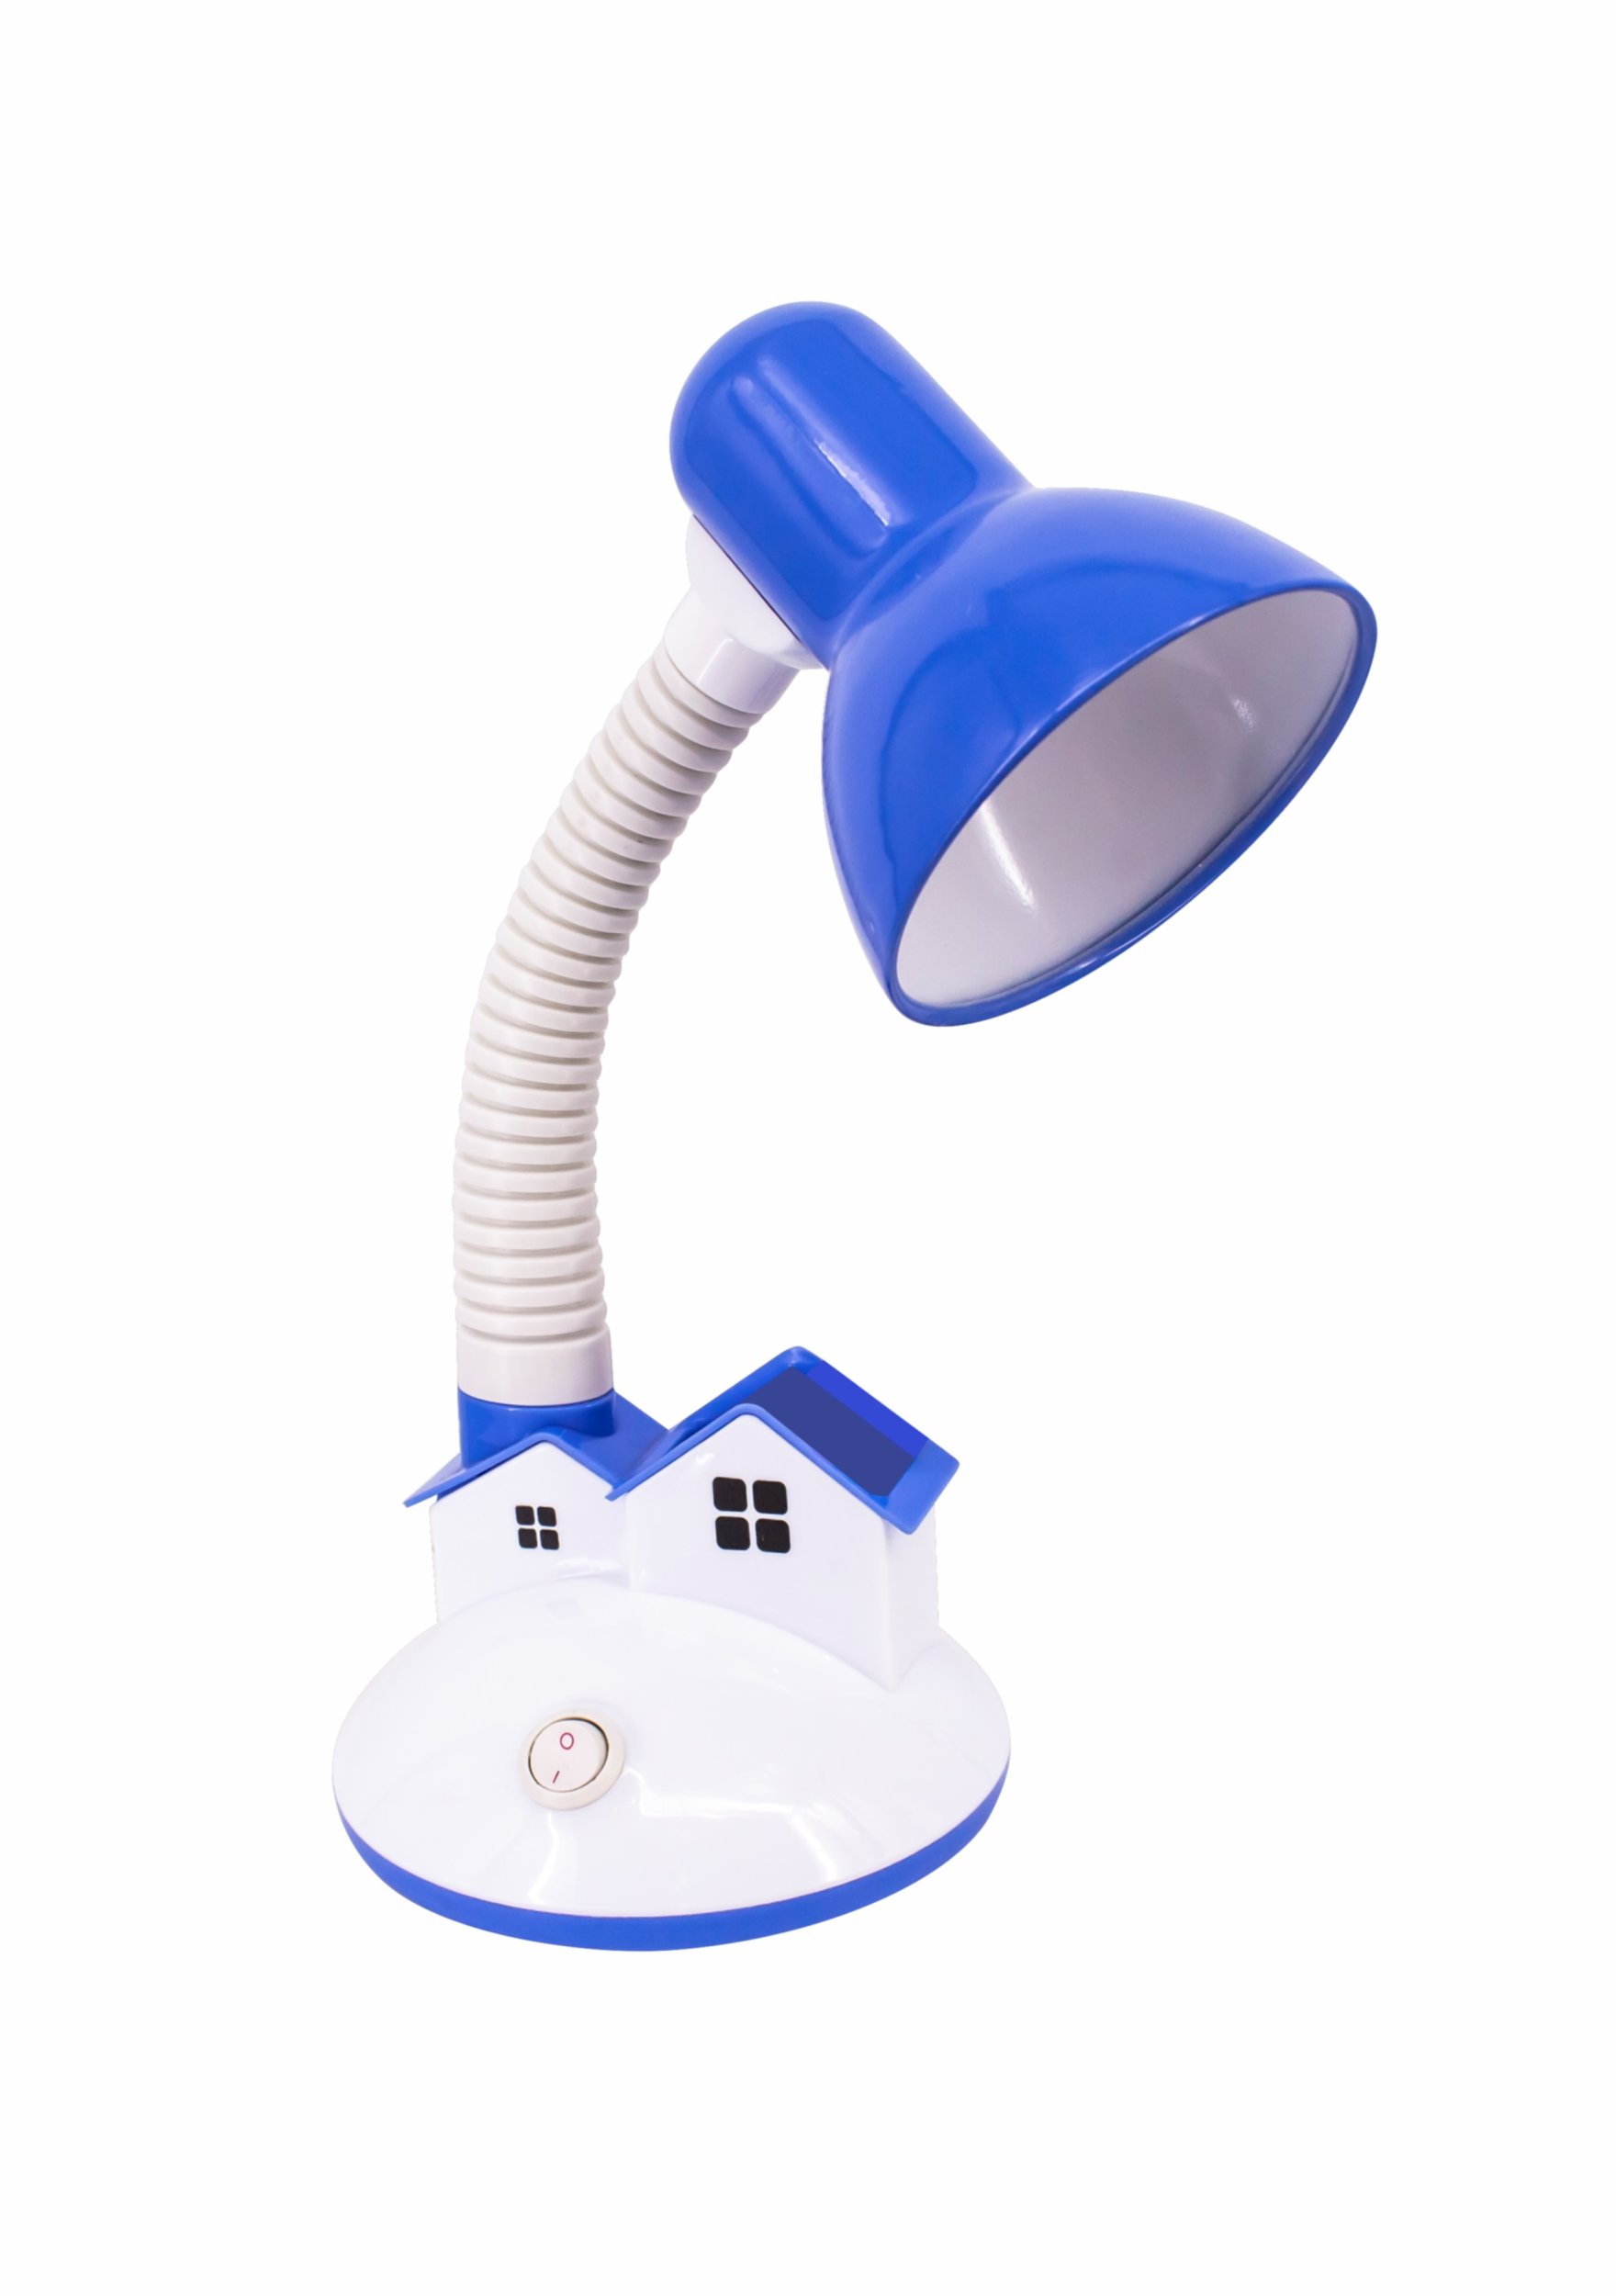 Детская настольная лампа Leek TL-110 LE061402-0048, цвет синий